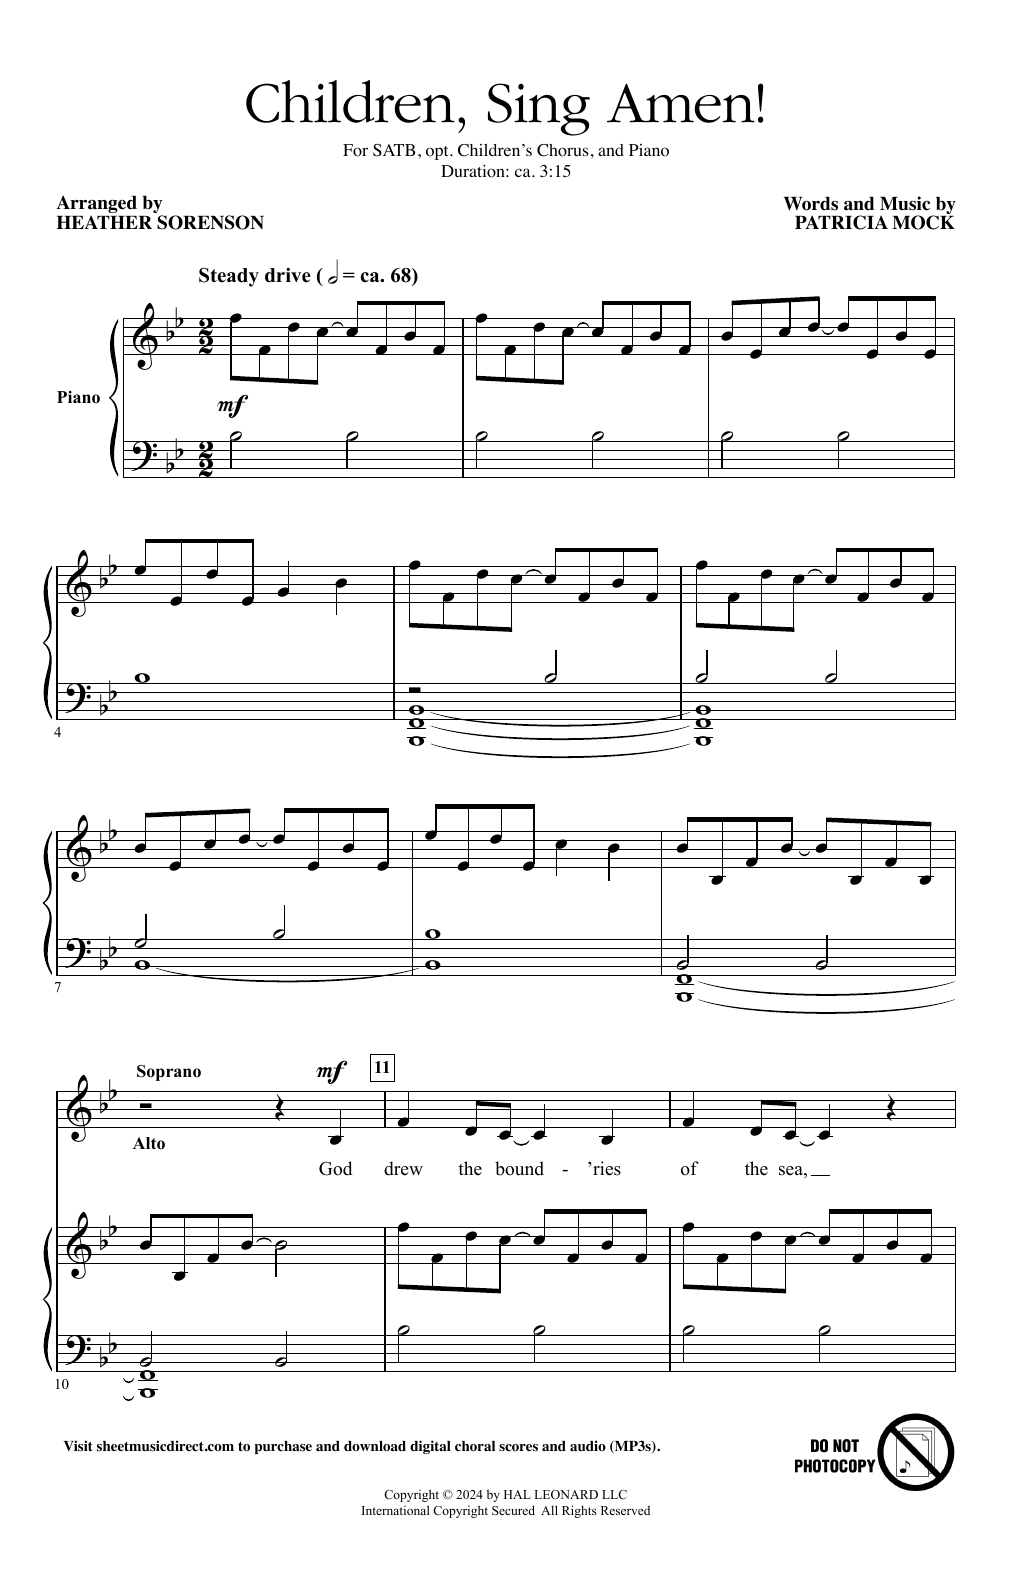 Patricia Mock Children, Sing Amen! (arr. Heather Sorenson) Sheet Music Notes & Chords for SATB Choir - Download or Print PDF